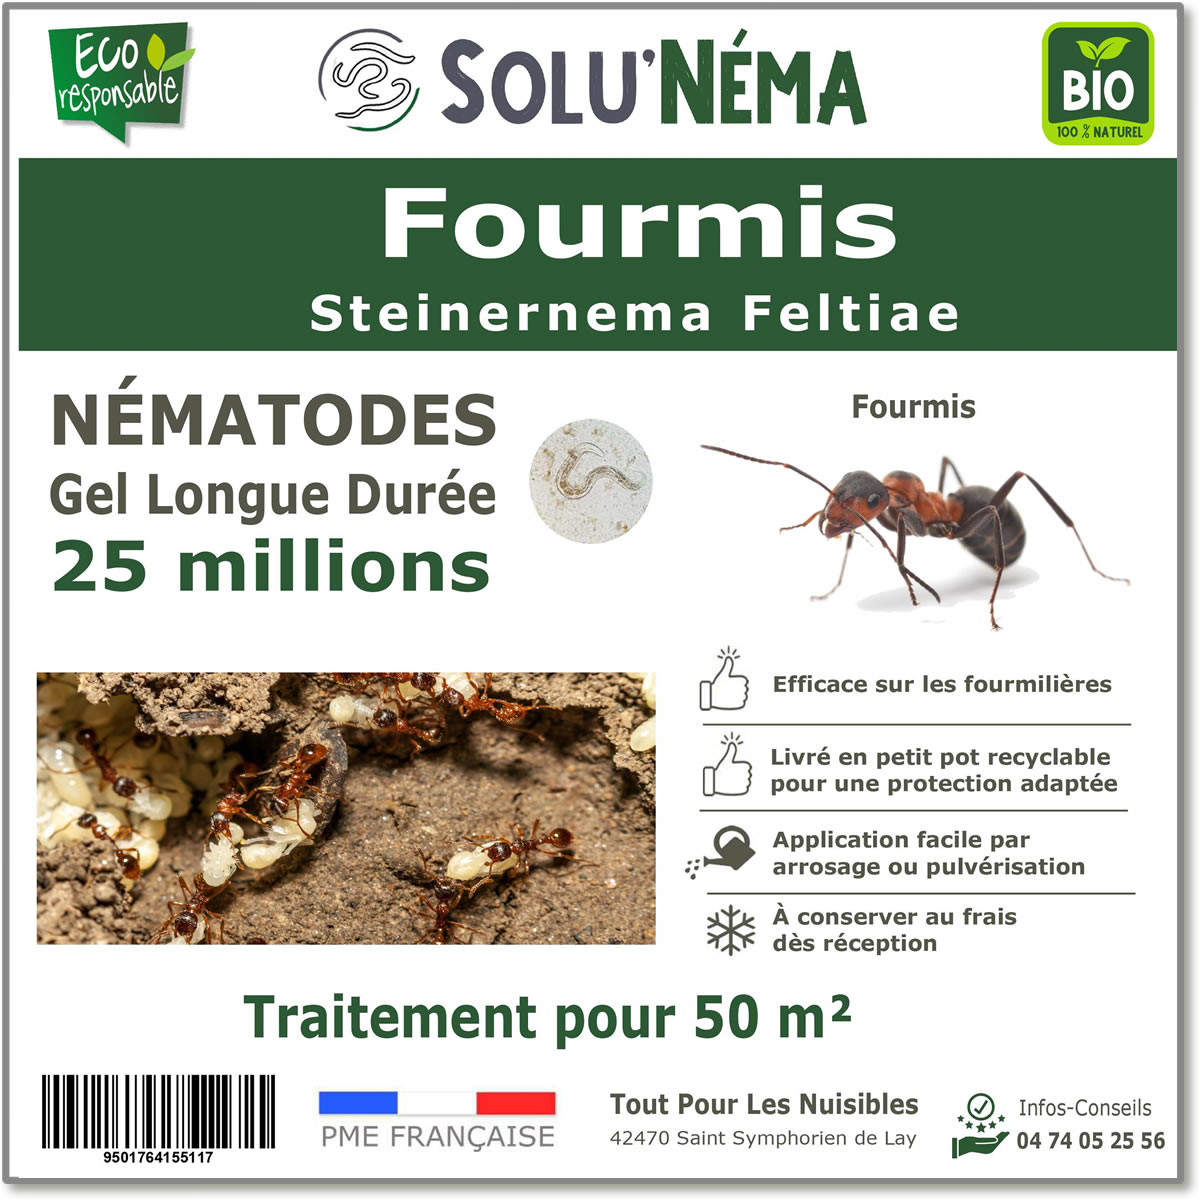 Nematodes ant treatment 25 million